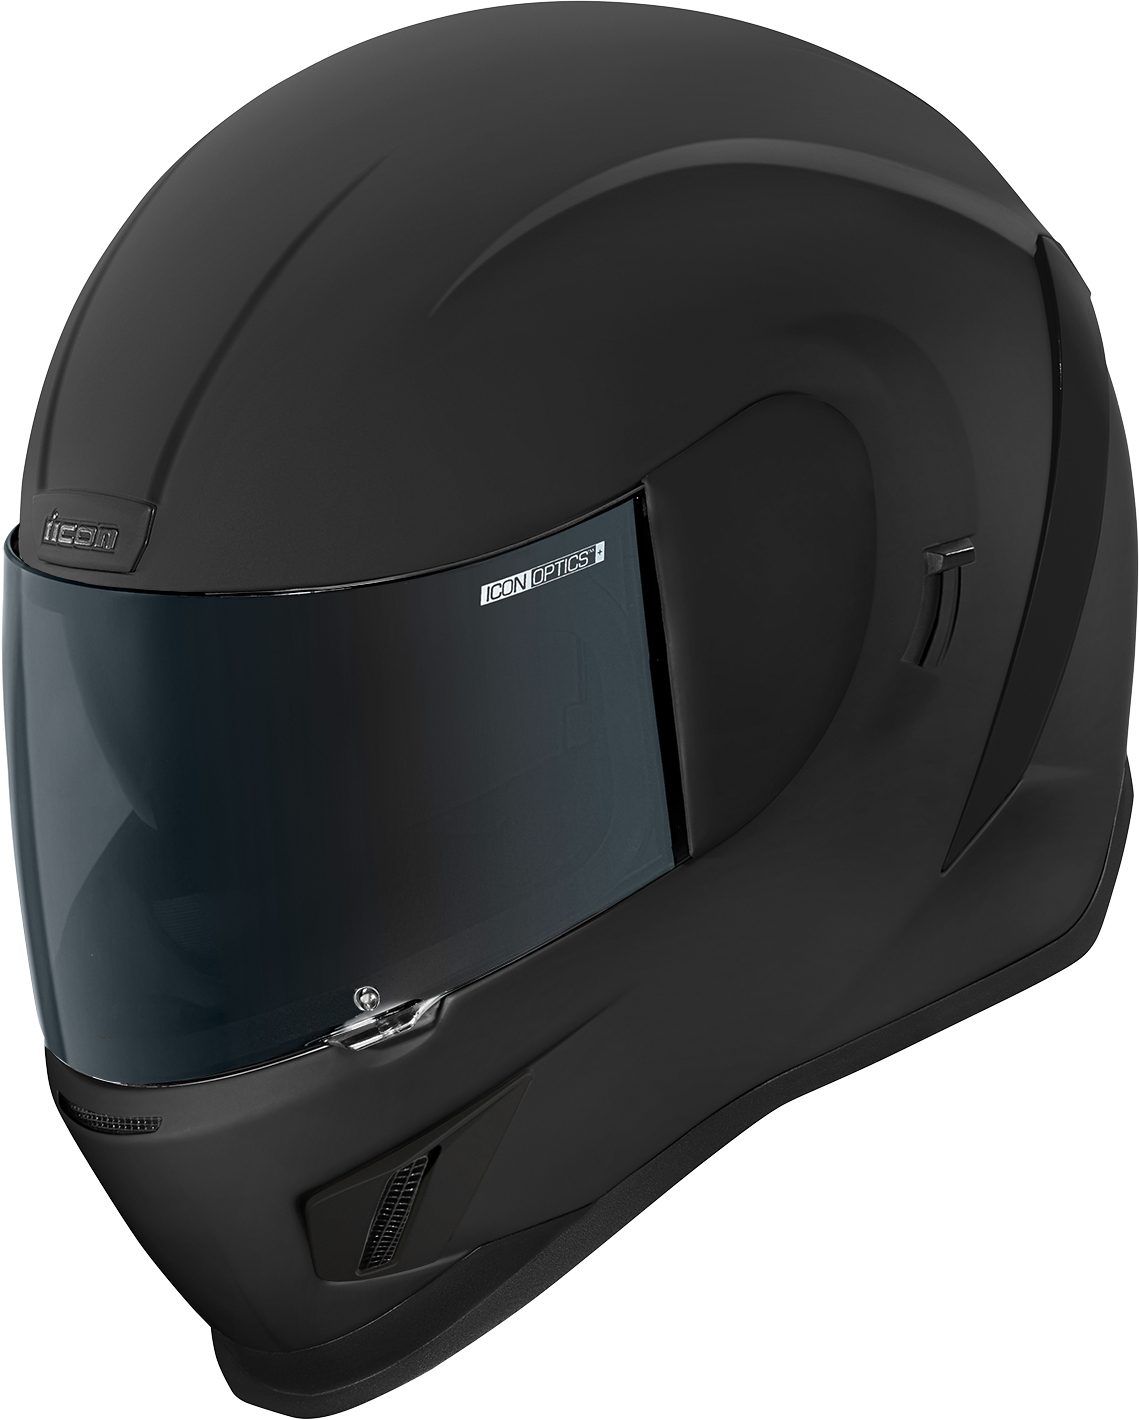 ICON Airform™ Helmet - Dark - Rubatone - 3XL 0101-15455